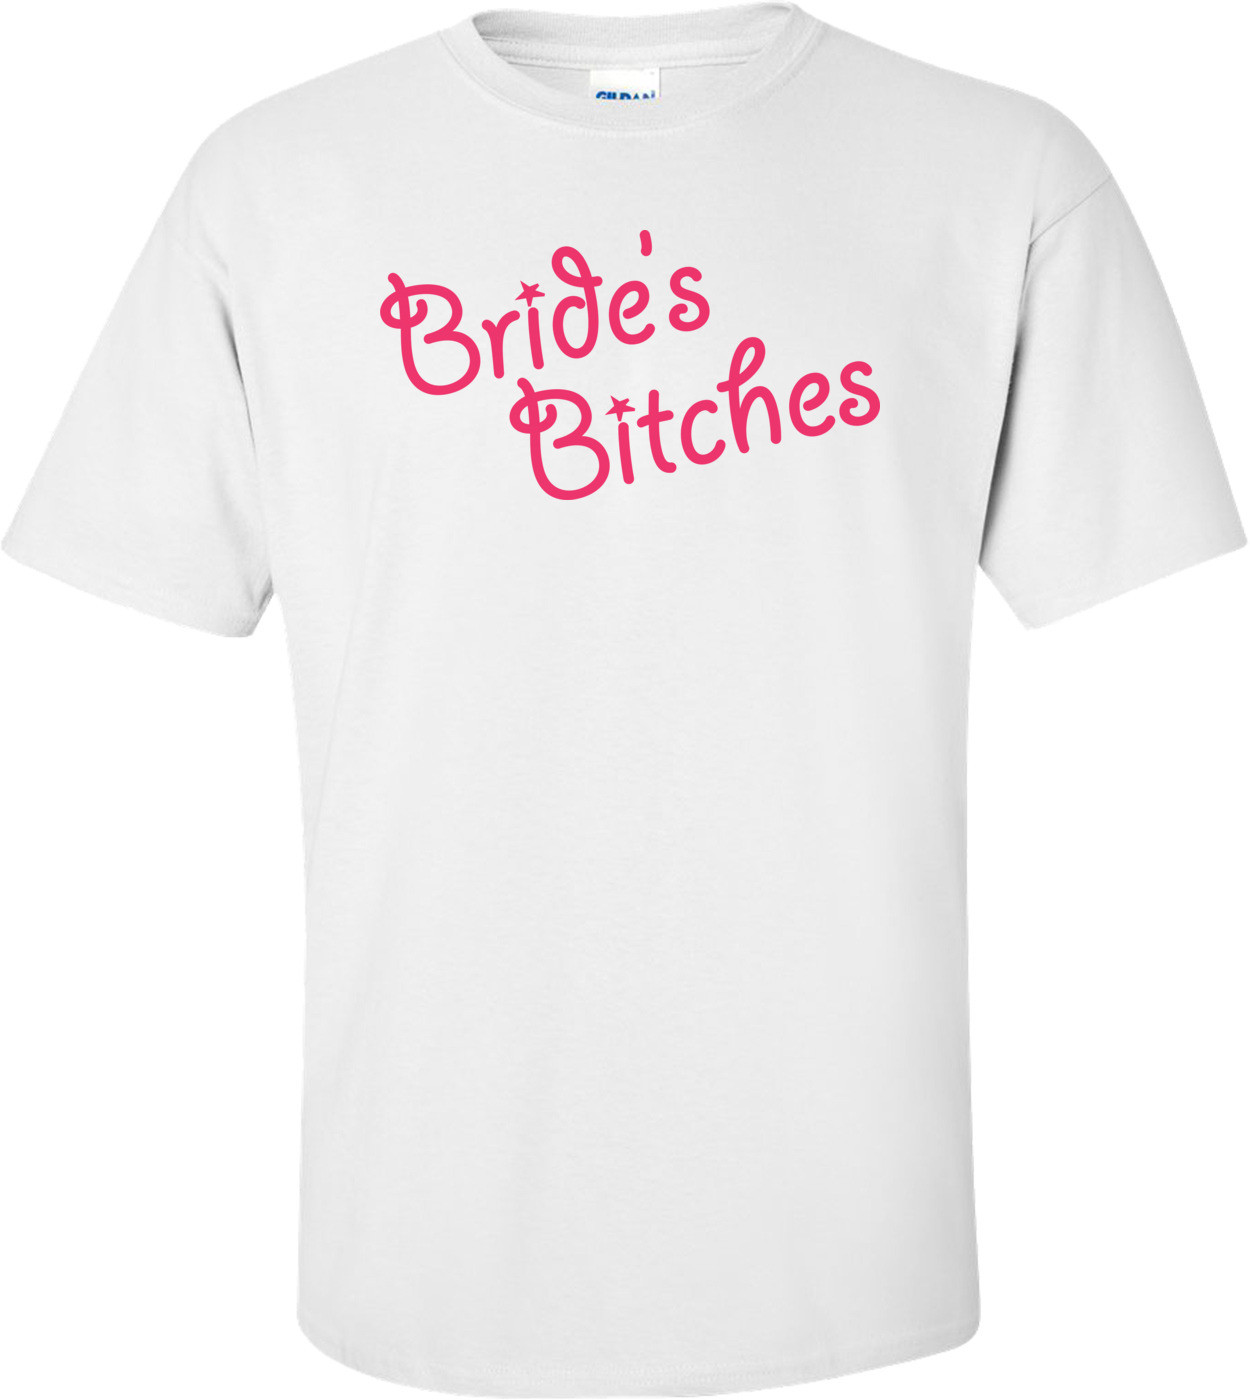 Brides Bitches